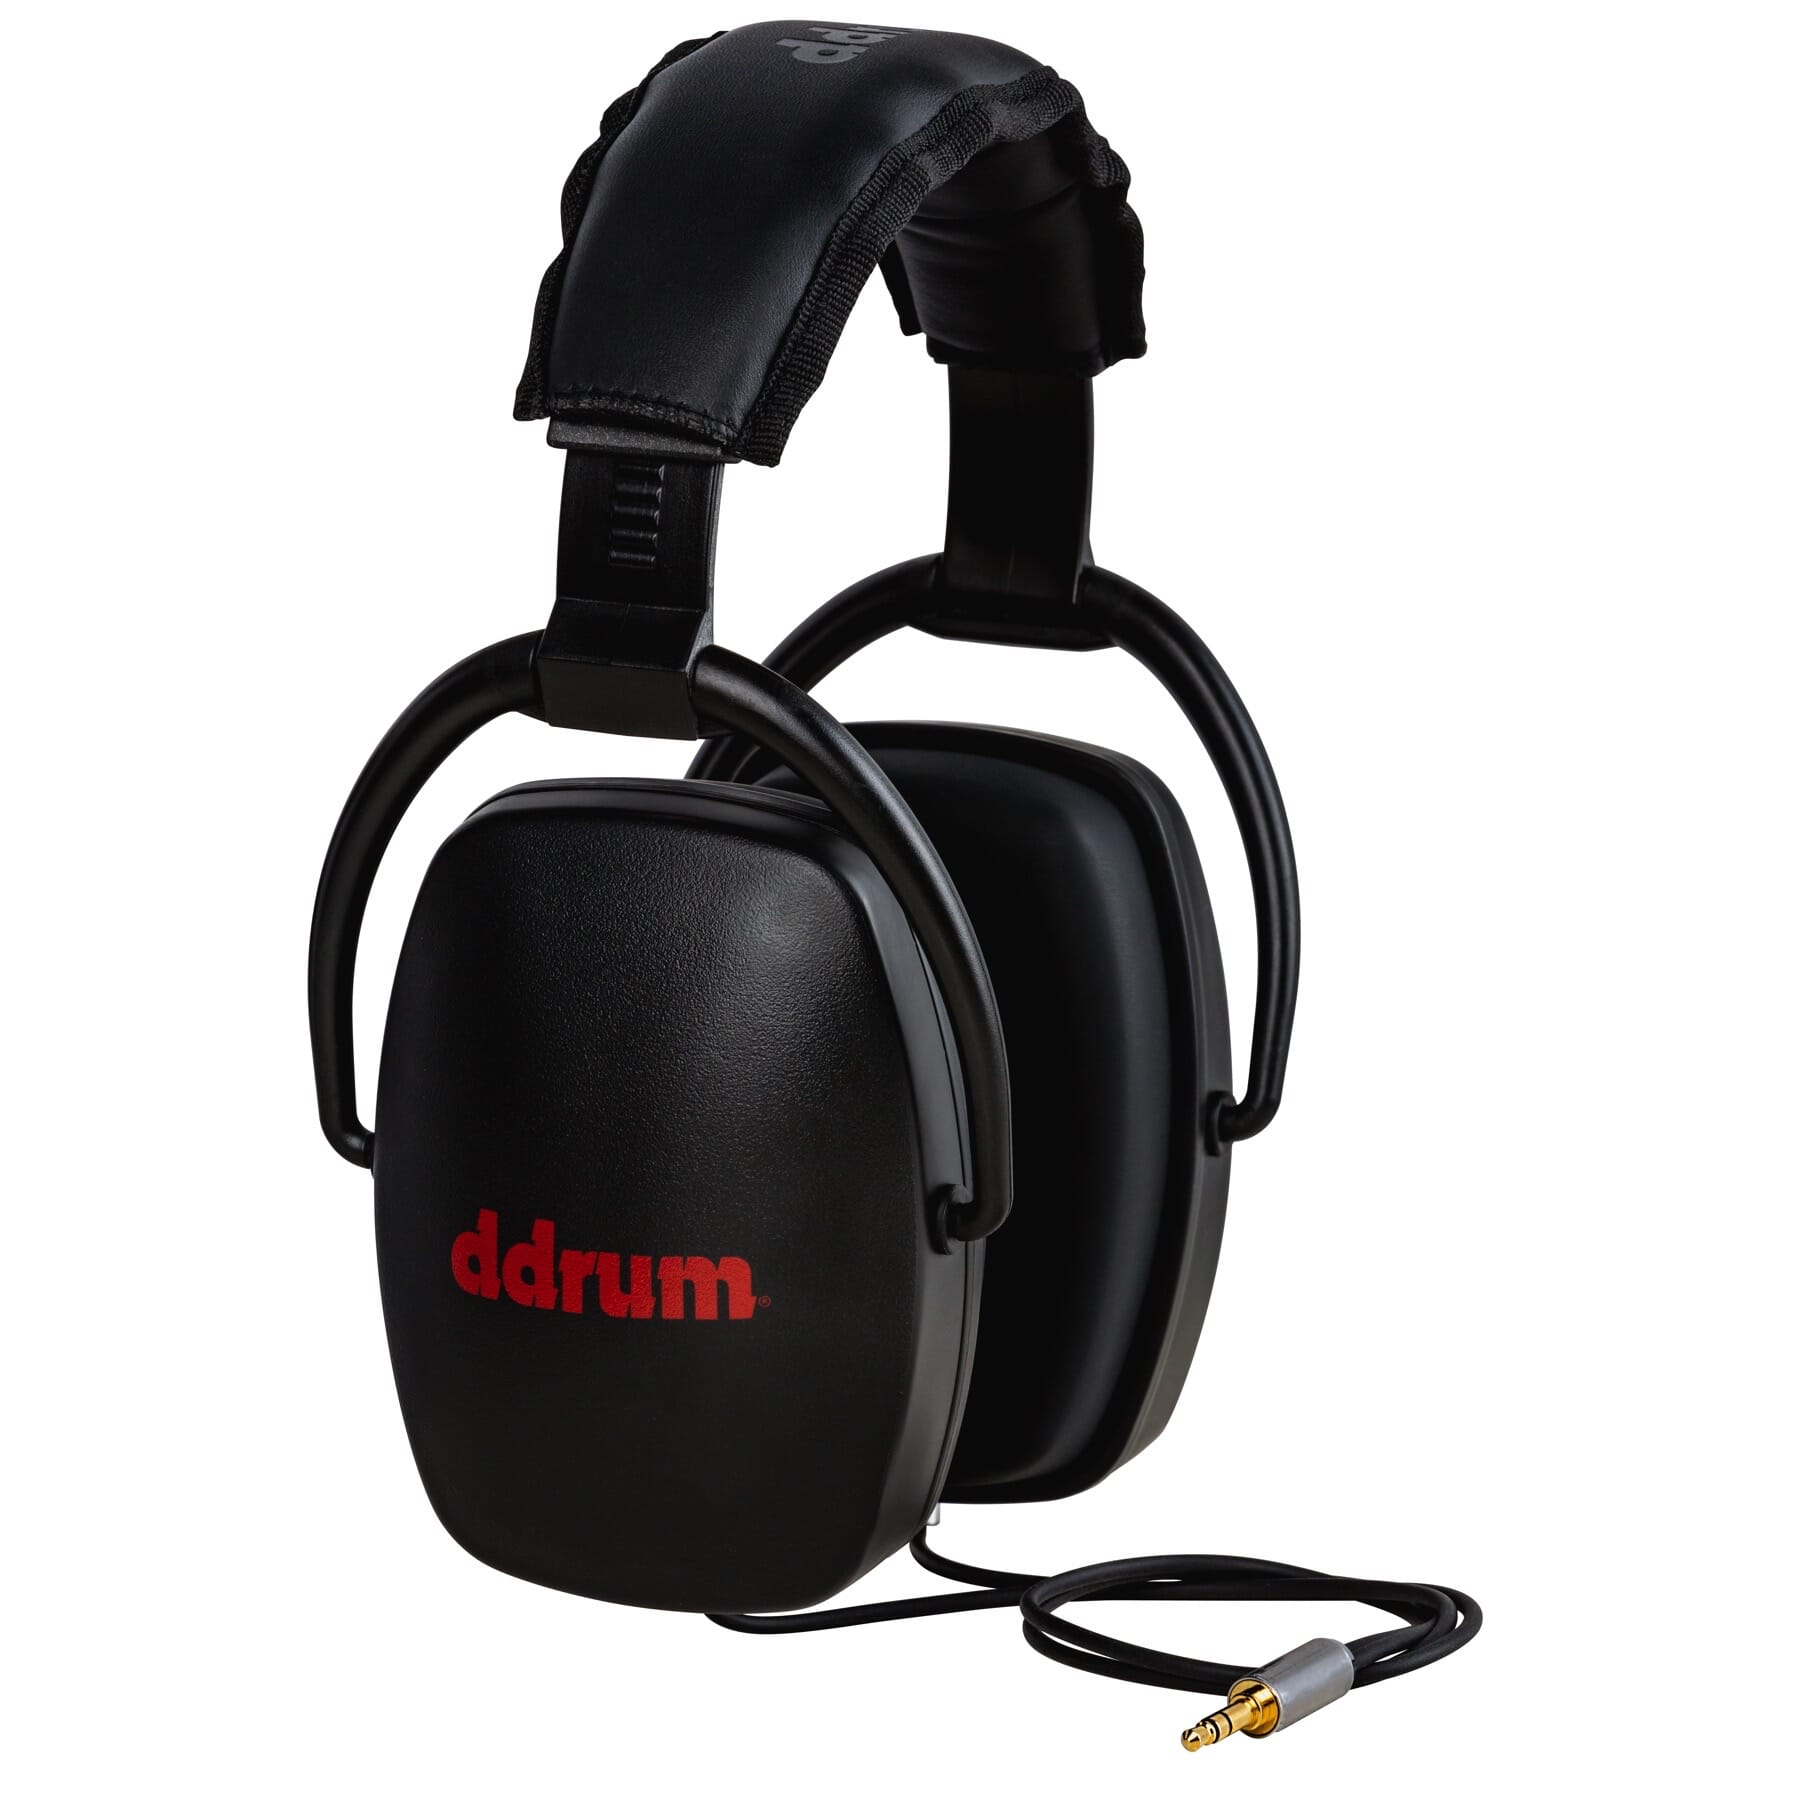 ddrum Studio Class Isolation Headphones - Black